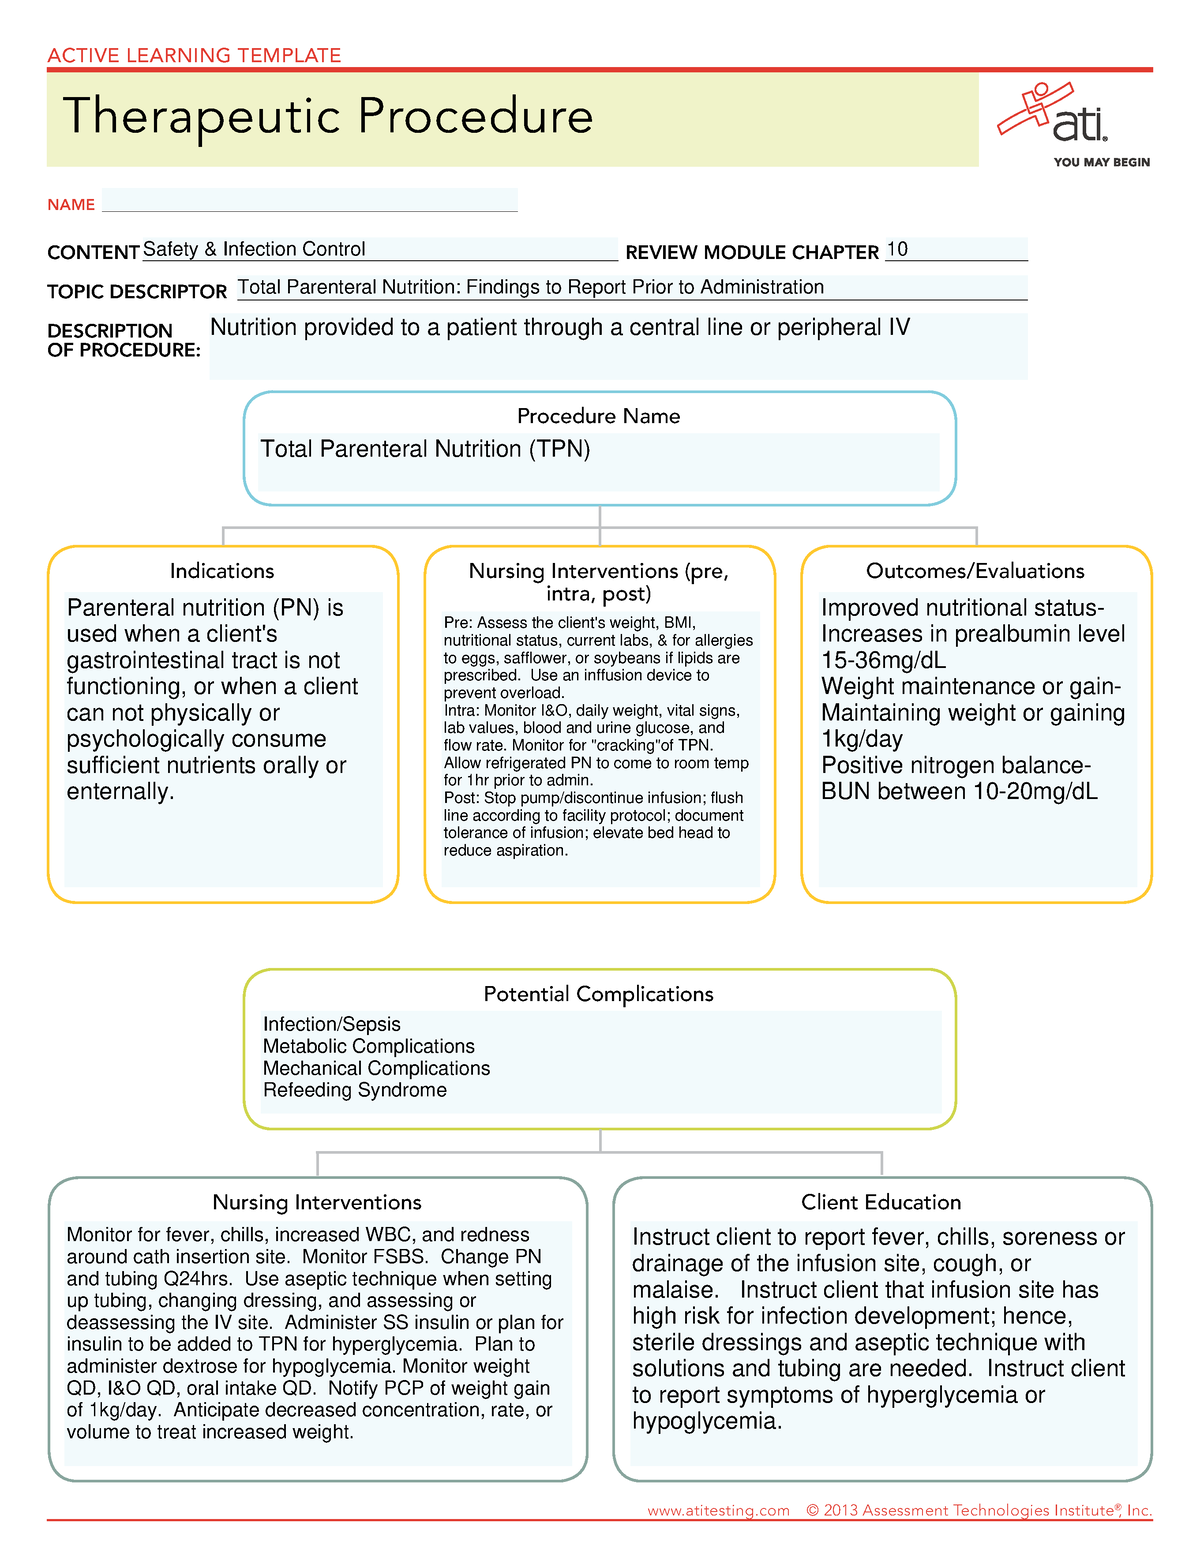 ati-therapeutic-procedure-template-indications-nursing-interventions-client-education-nursing